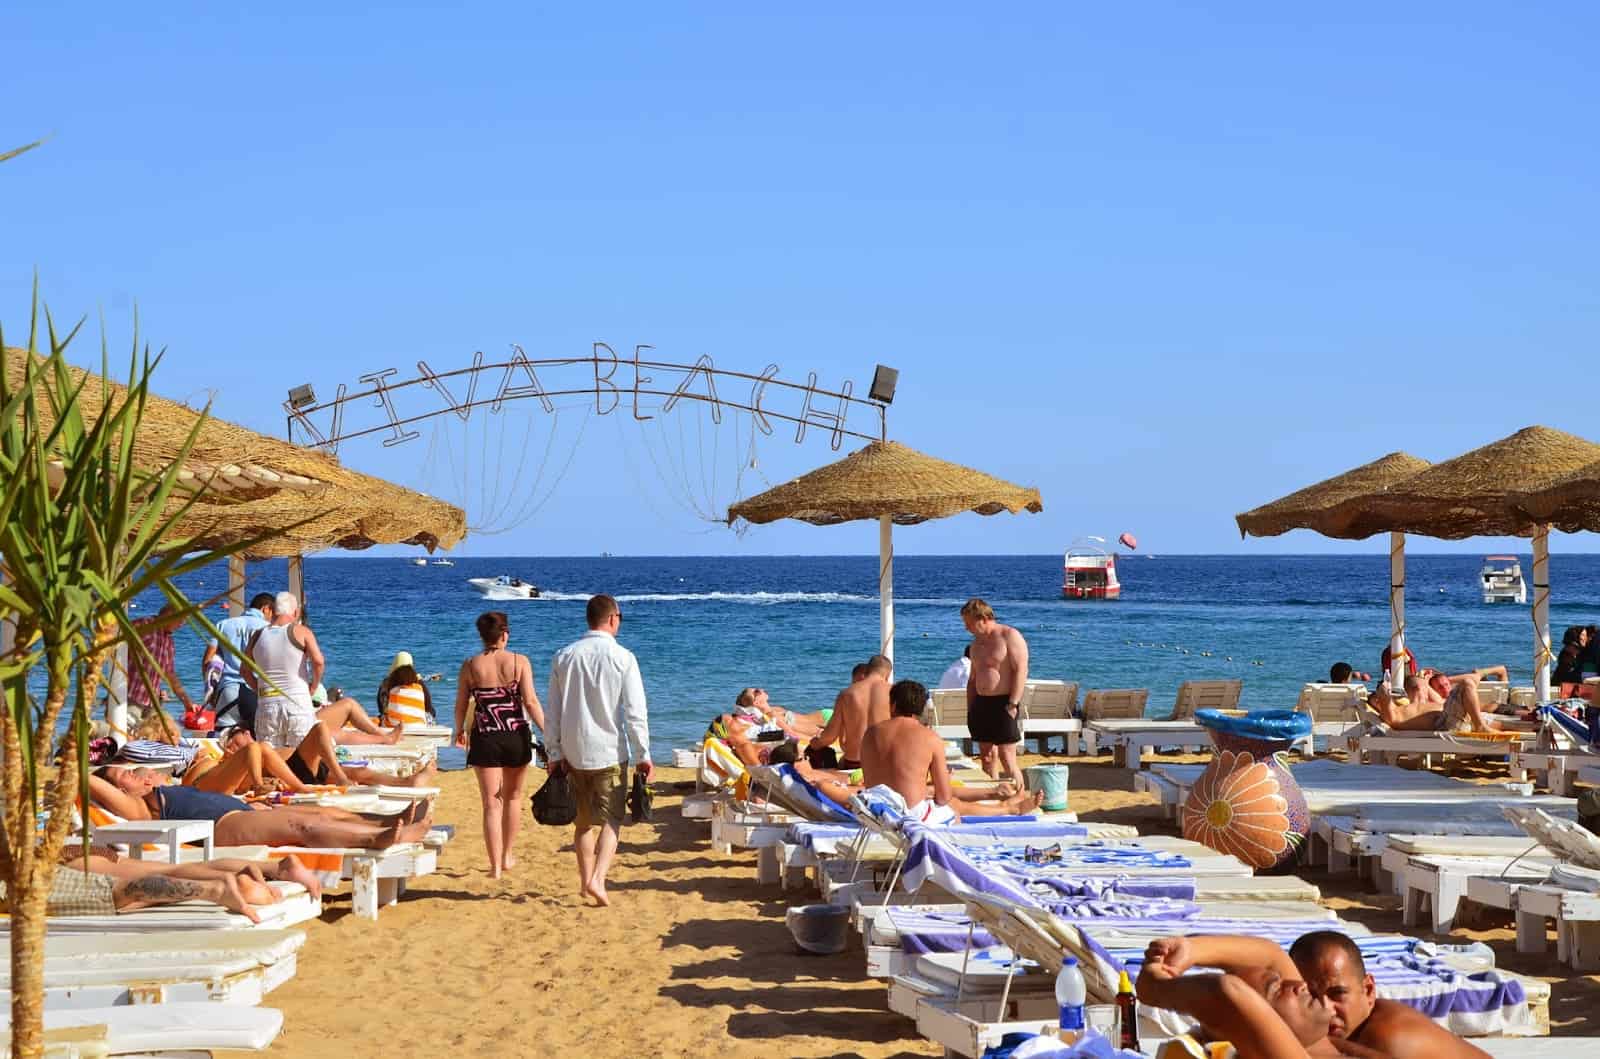 Viva Beach – Aida 2 Hotel’s beach in Na'ama Bay, Sharm el-Sheikh, Egypt